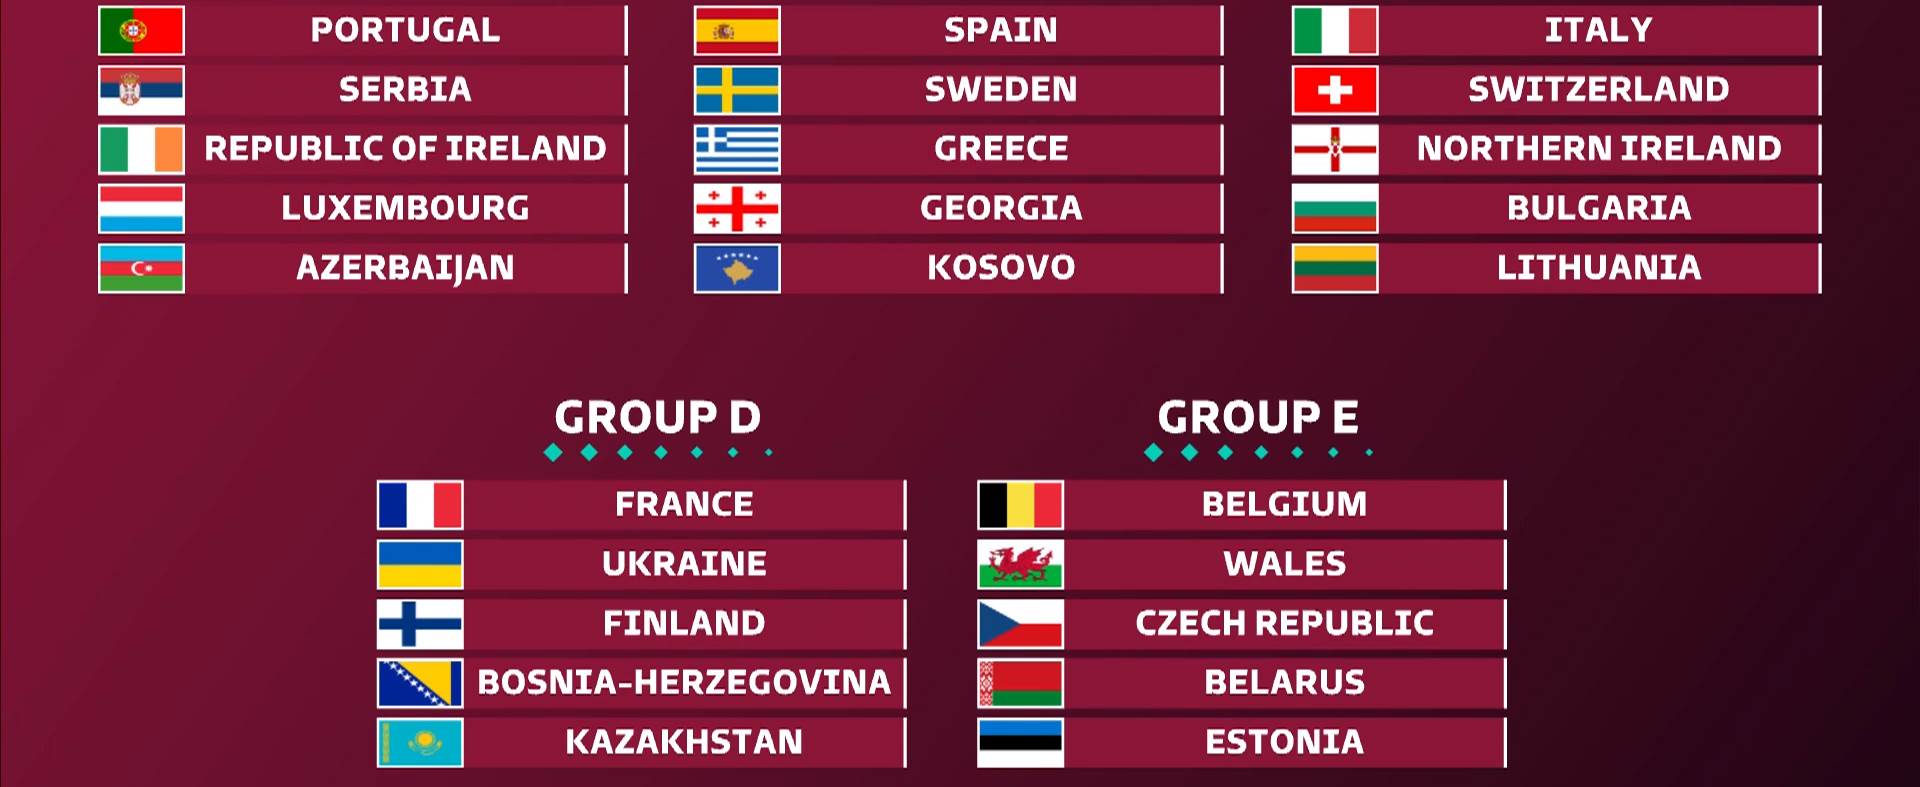  zreb kvalifikacije svetsko prvenstvo 2022 kosovo srbija spanija grcka gruzija uefa lakrdija 